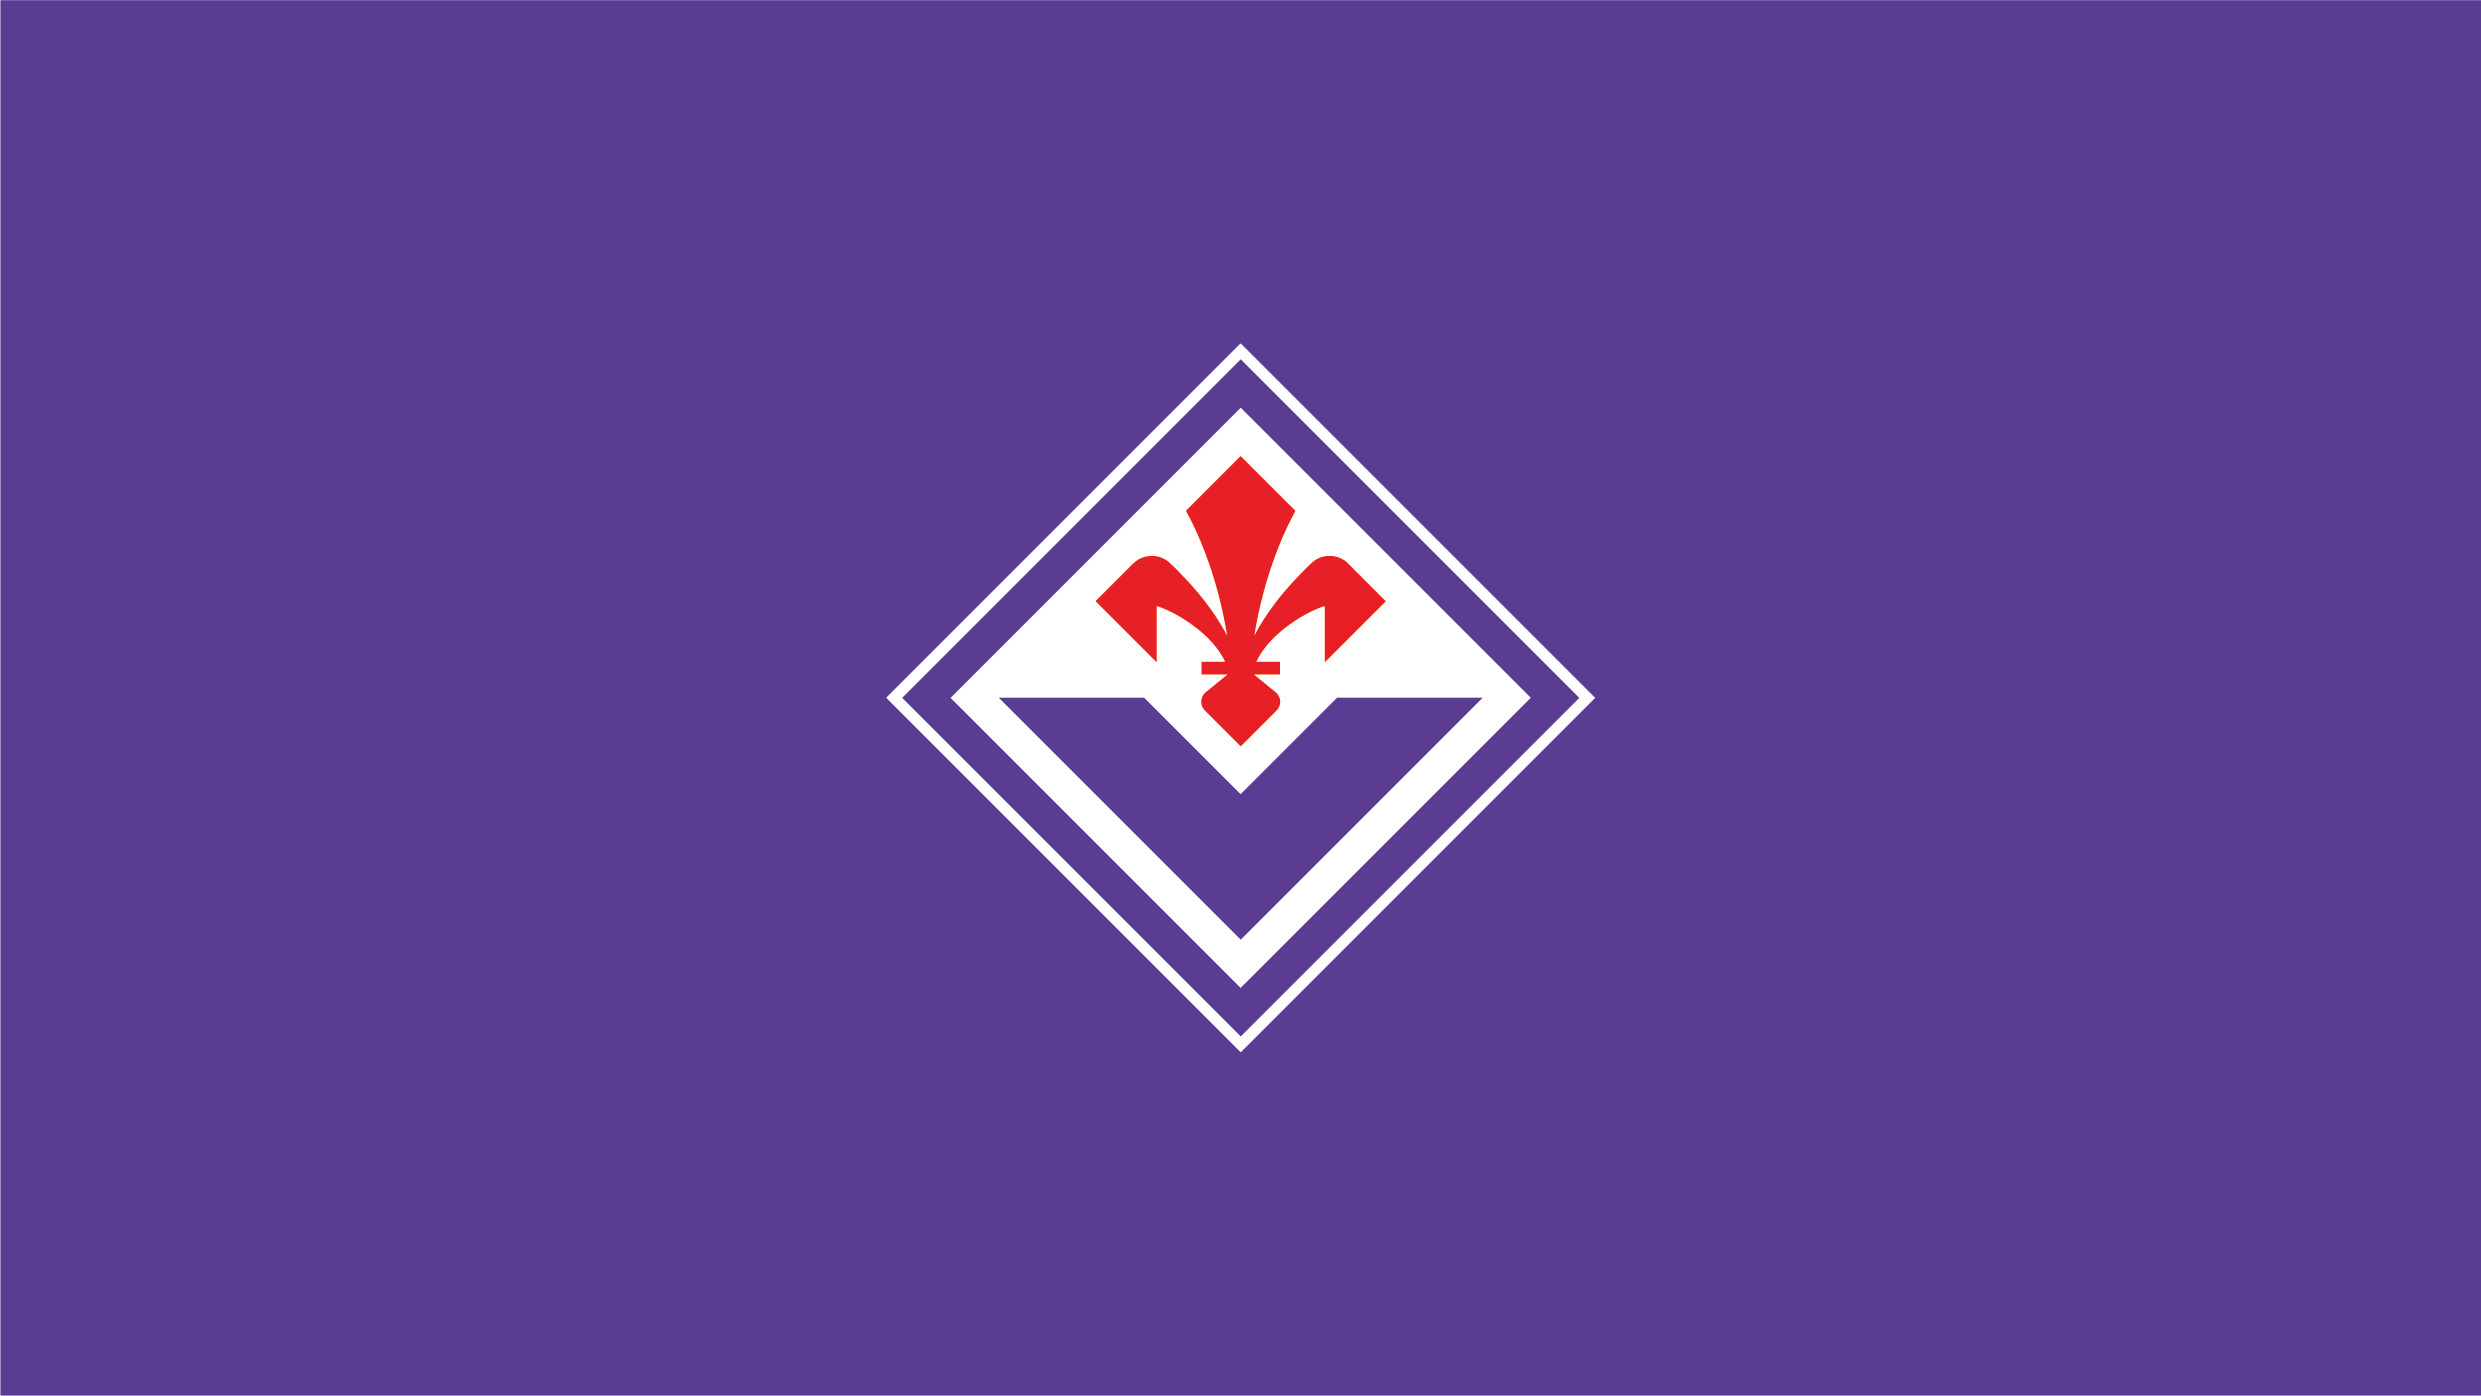 ACF Fiorentina - Official website